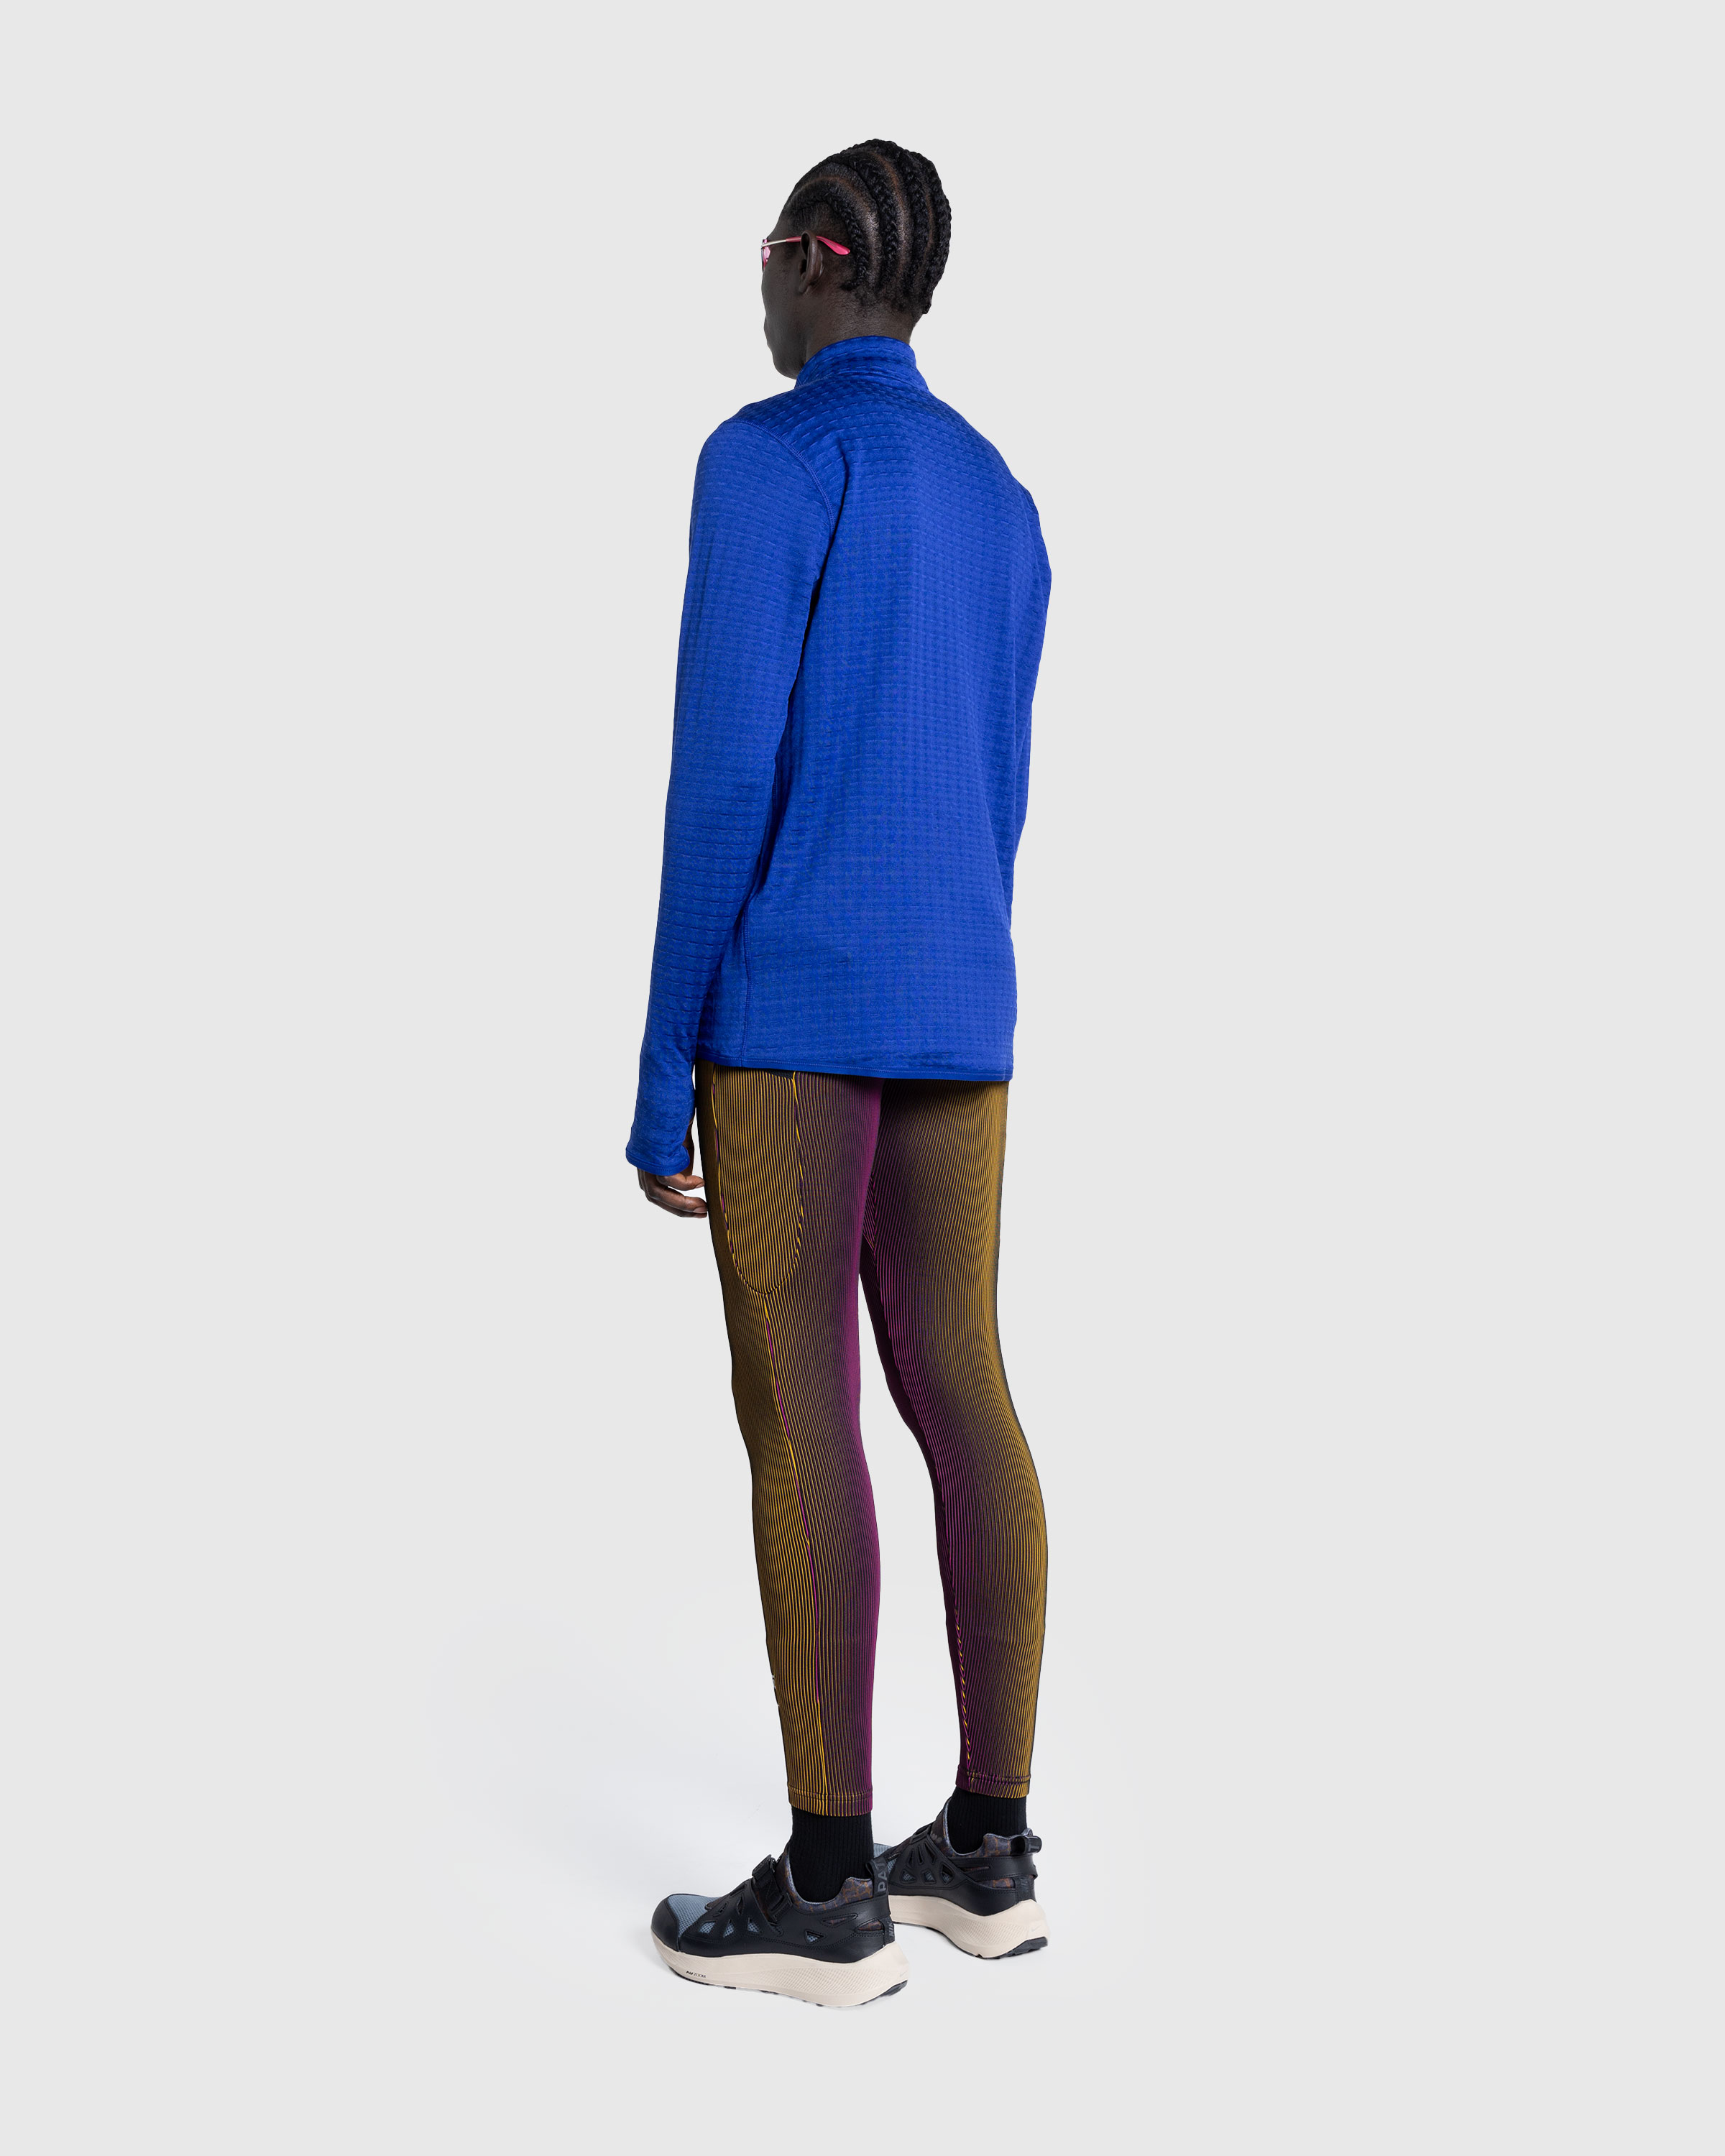 Nike x Patta – Half-Zip Long-Sleeve Top Deep Royal Blue - Zip-Ups - Blue - Image 4